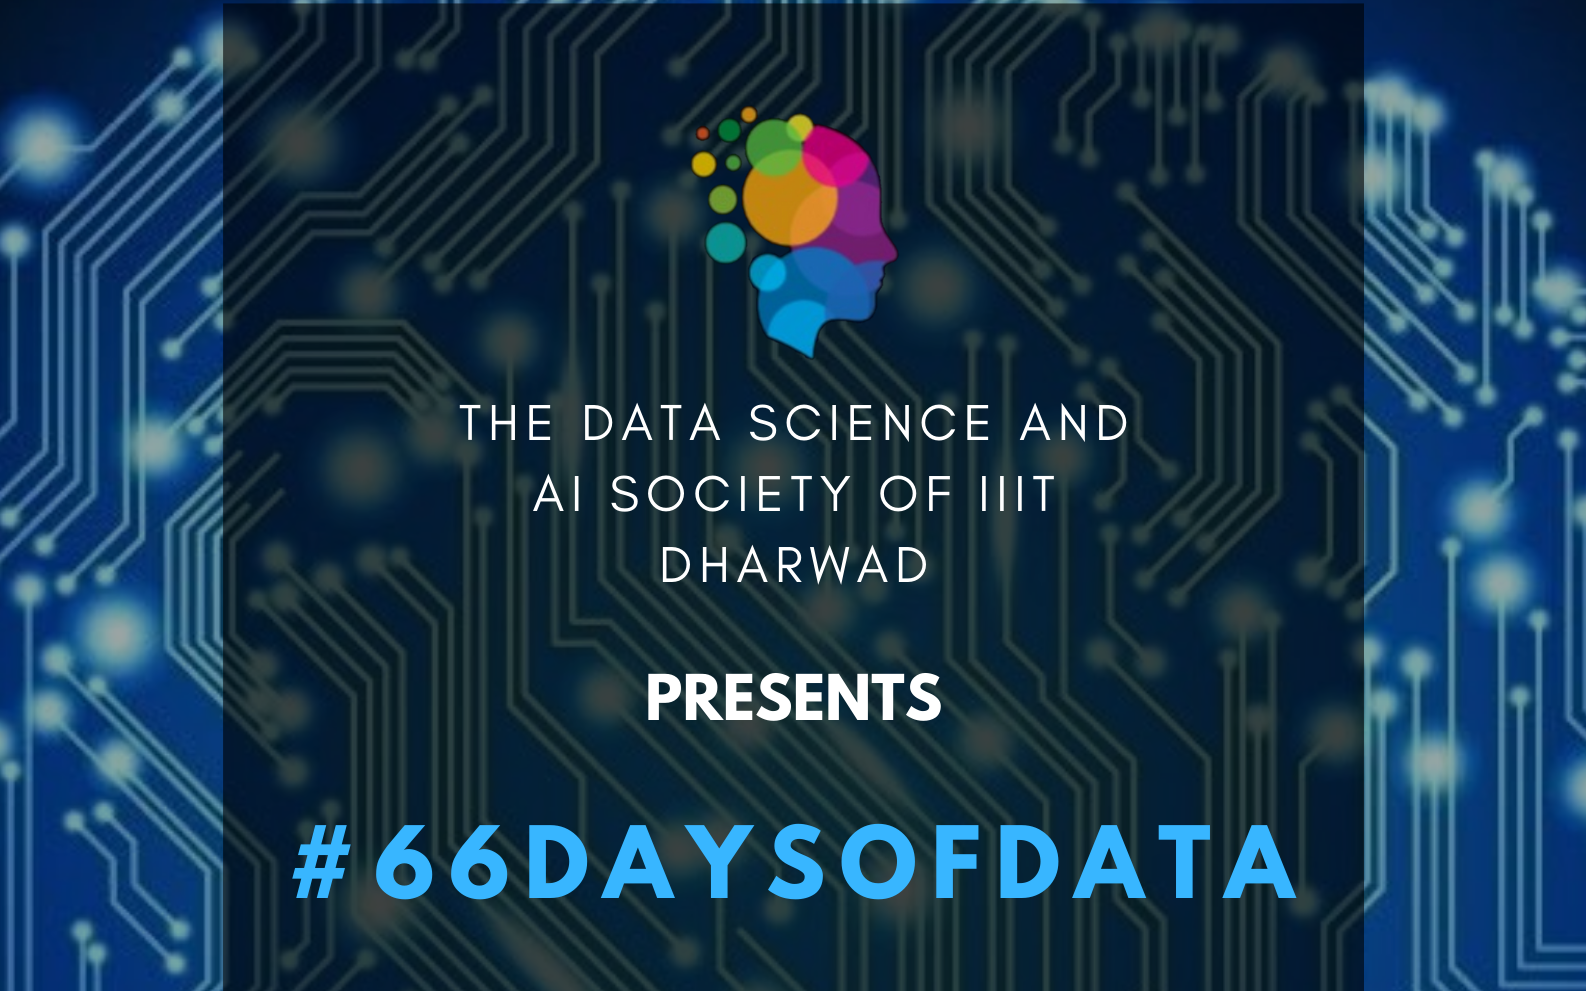 66 Days of Data!